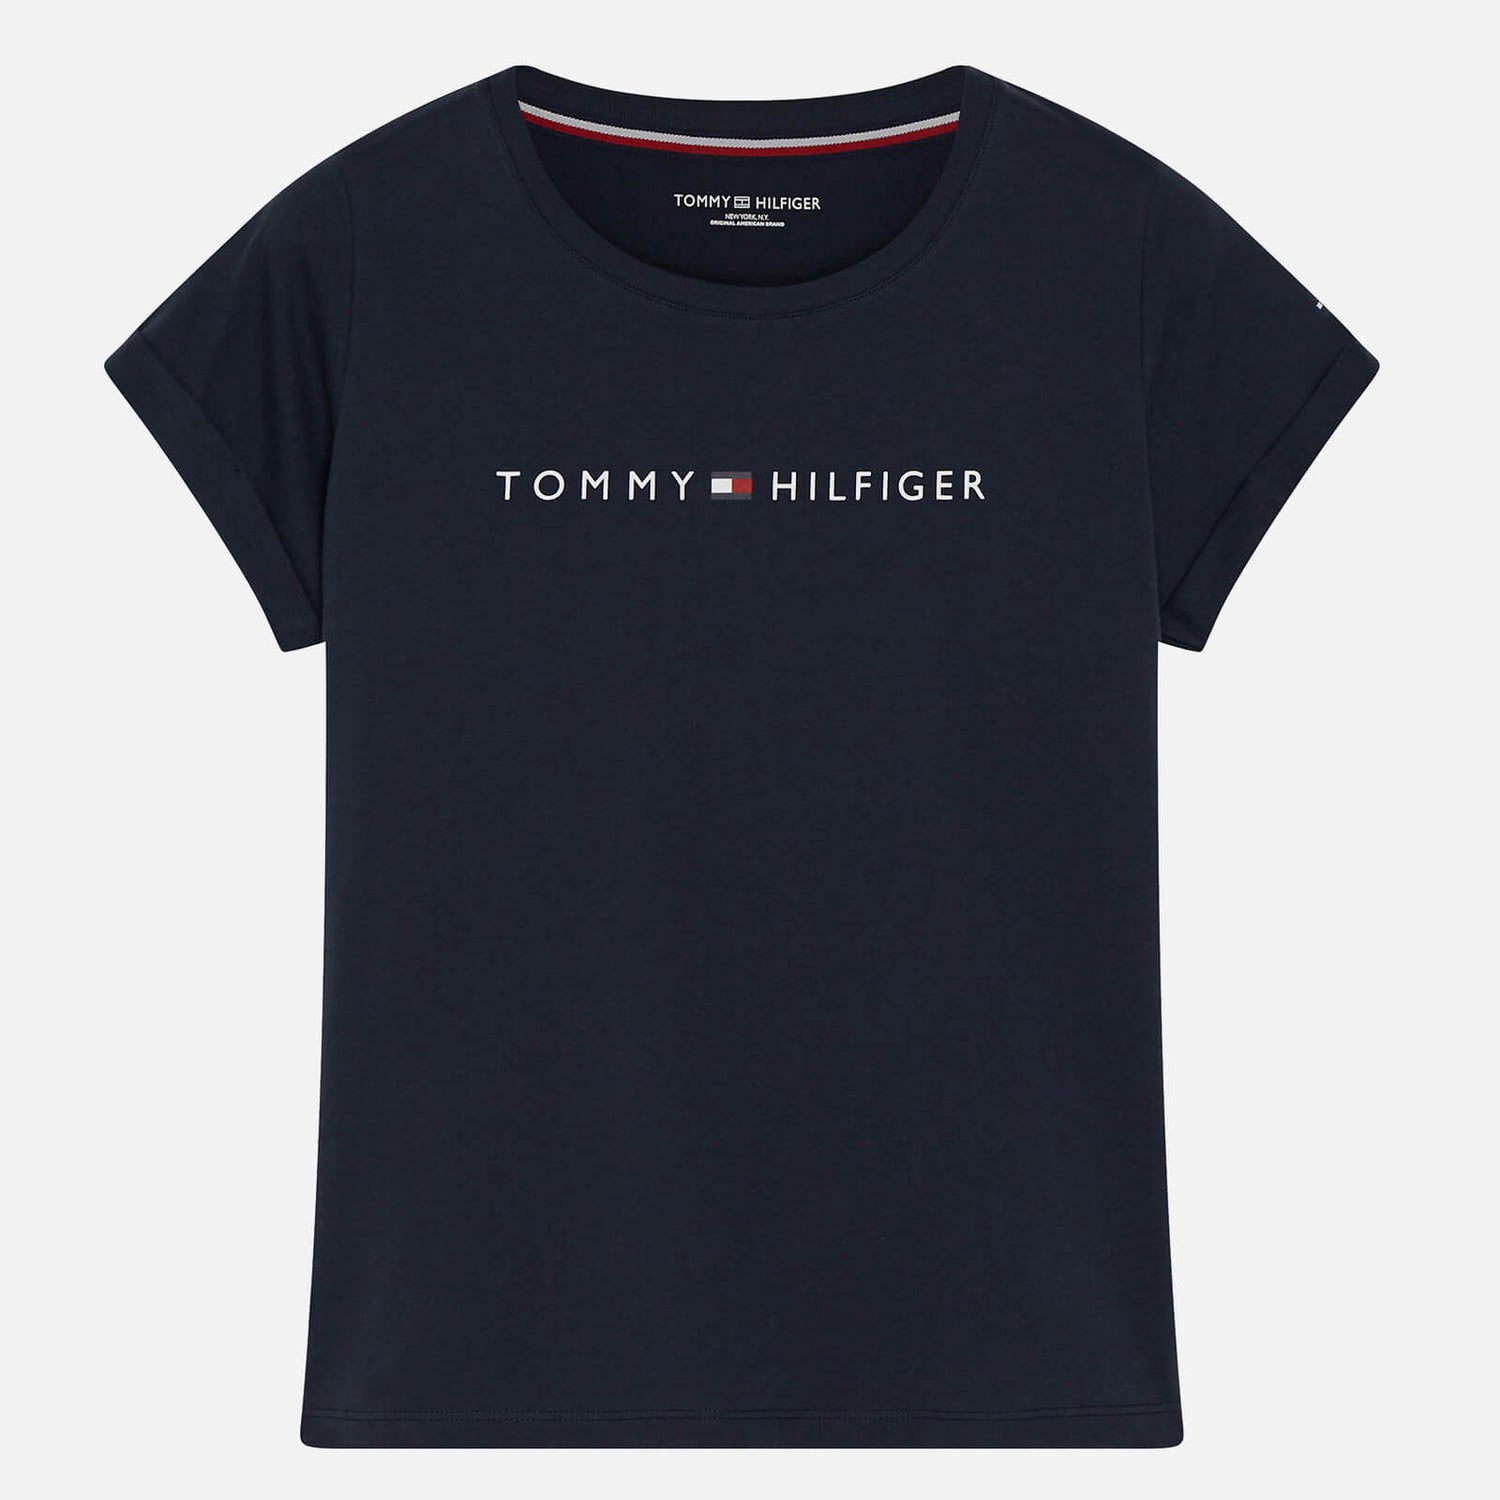 Tommy Hilfiger Women's Tommy Original Short Sleeve T-Shirt - Navy Blazer